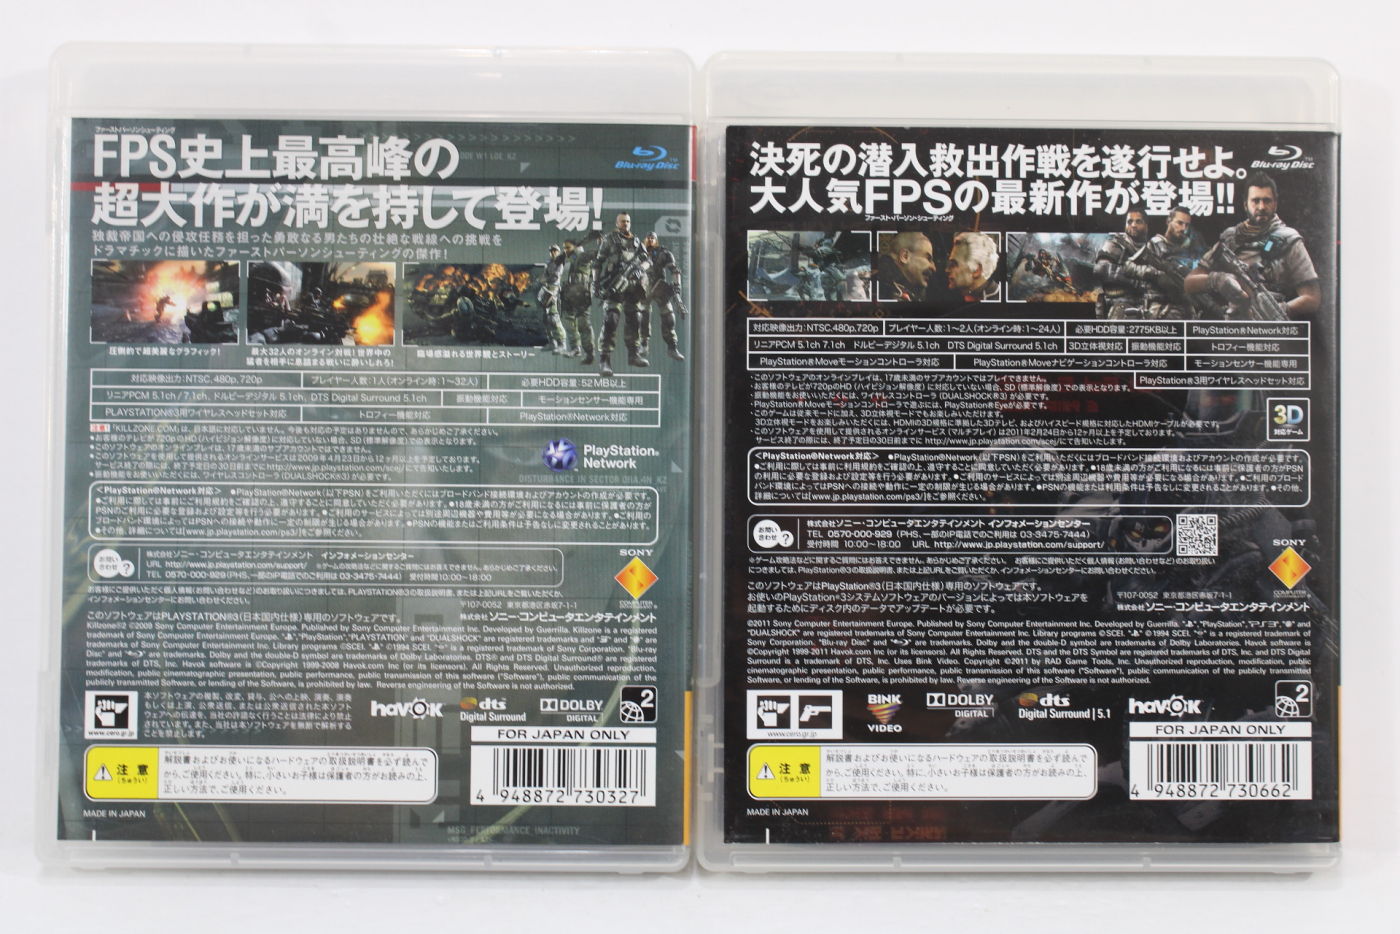  Killzone [Japan Import] : Video Games